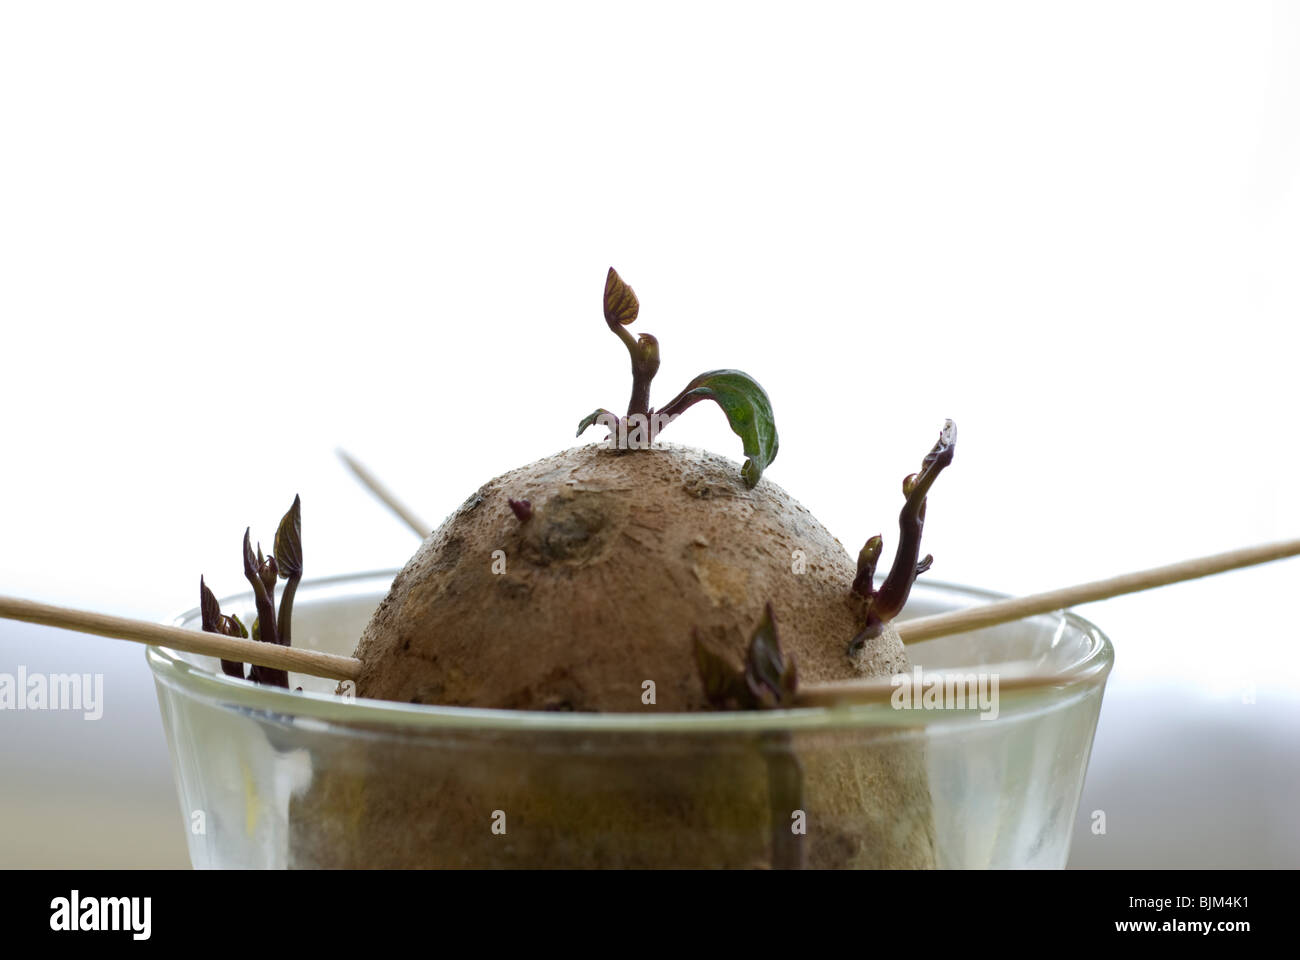 Growing sweet potato slips (Ipomoea batatas) - first stage, slip development. Stock Photo